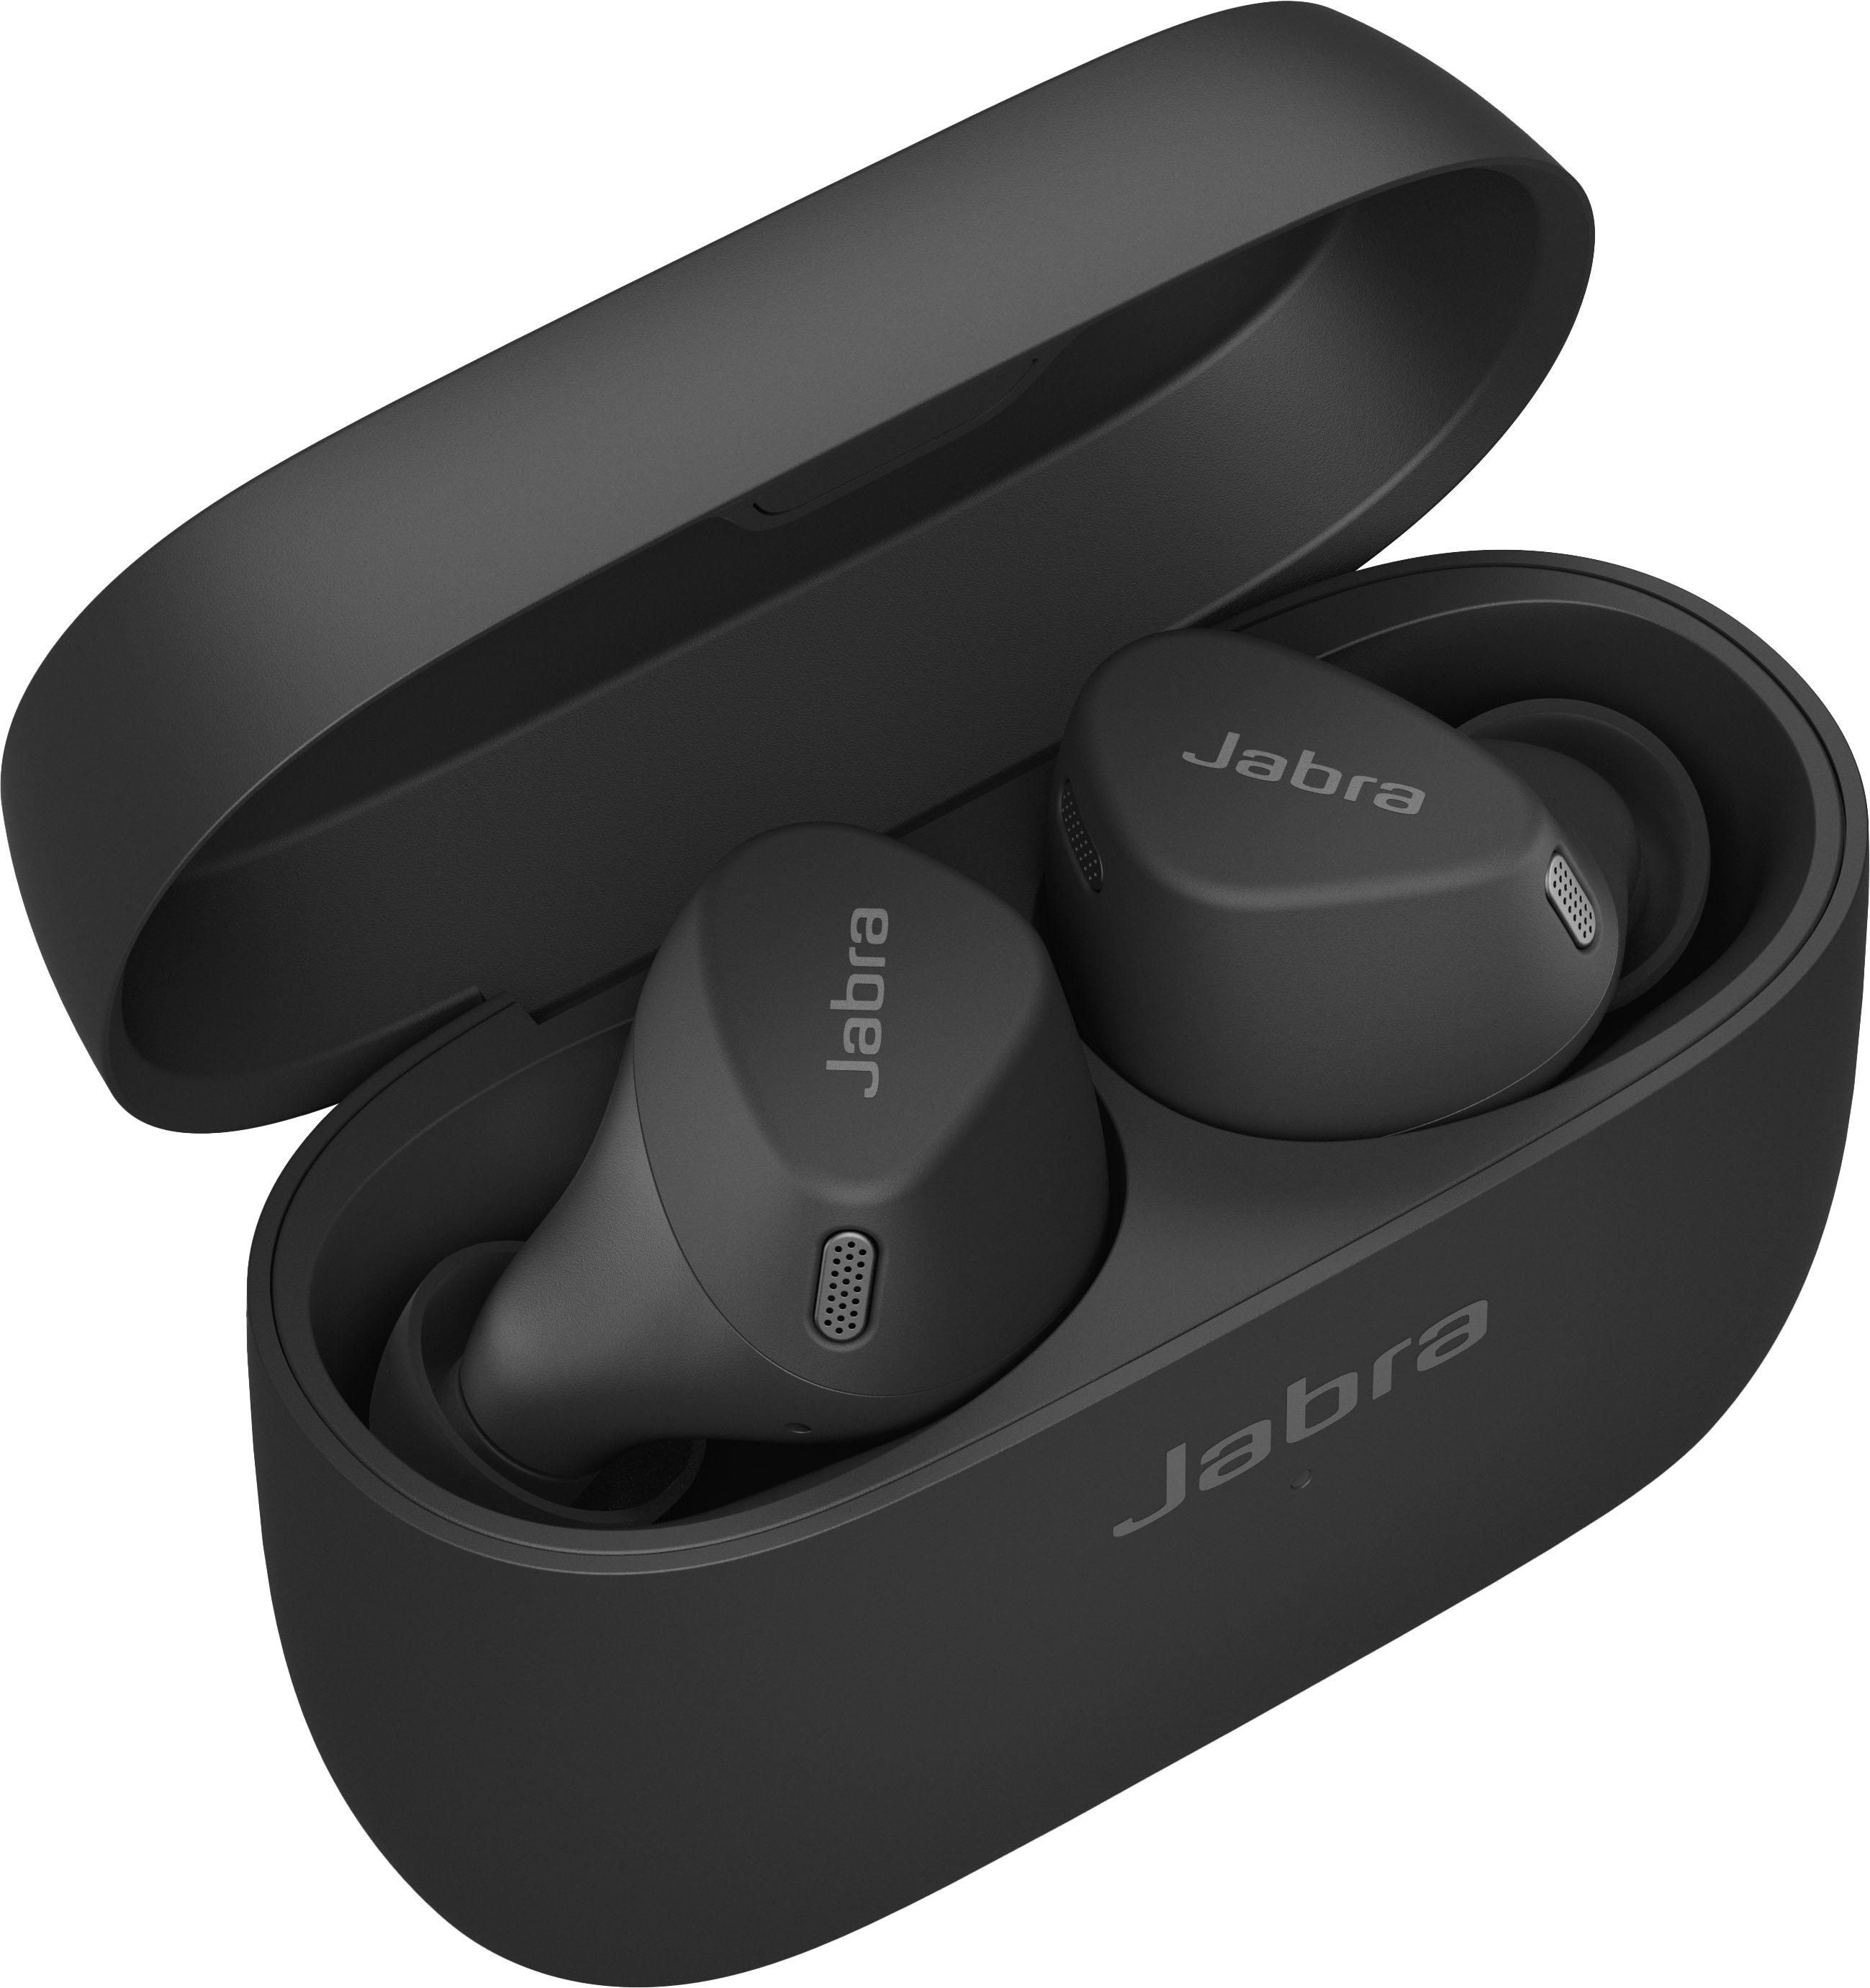 Jabra Elite 10 Dolby Atmos True Wireless In-ear Heaphones Cream  100-99280901-99 - Best Buy